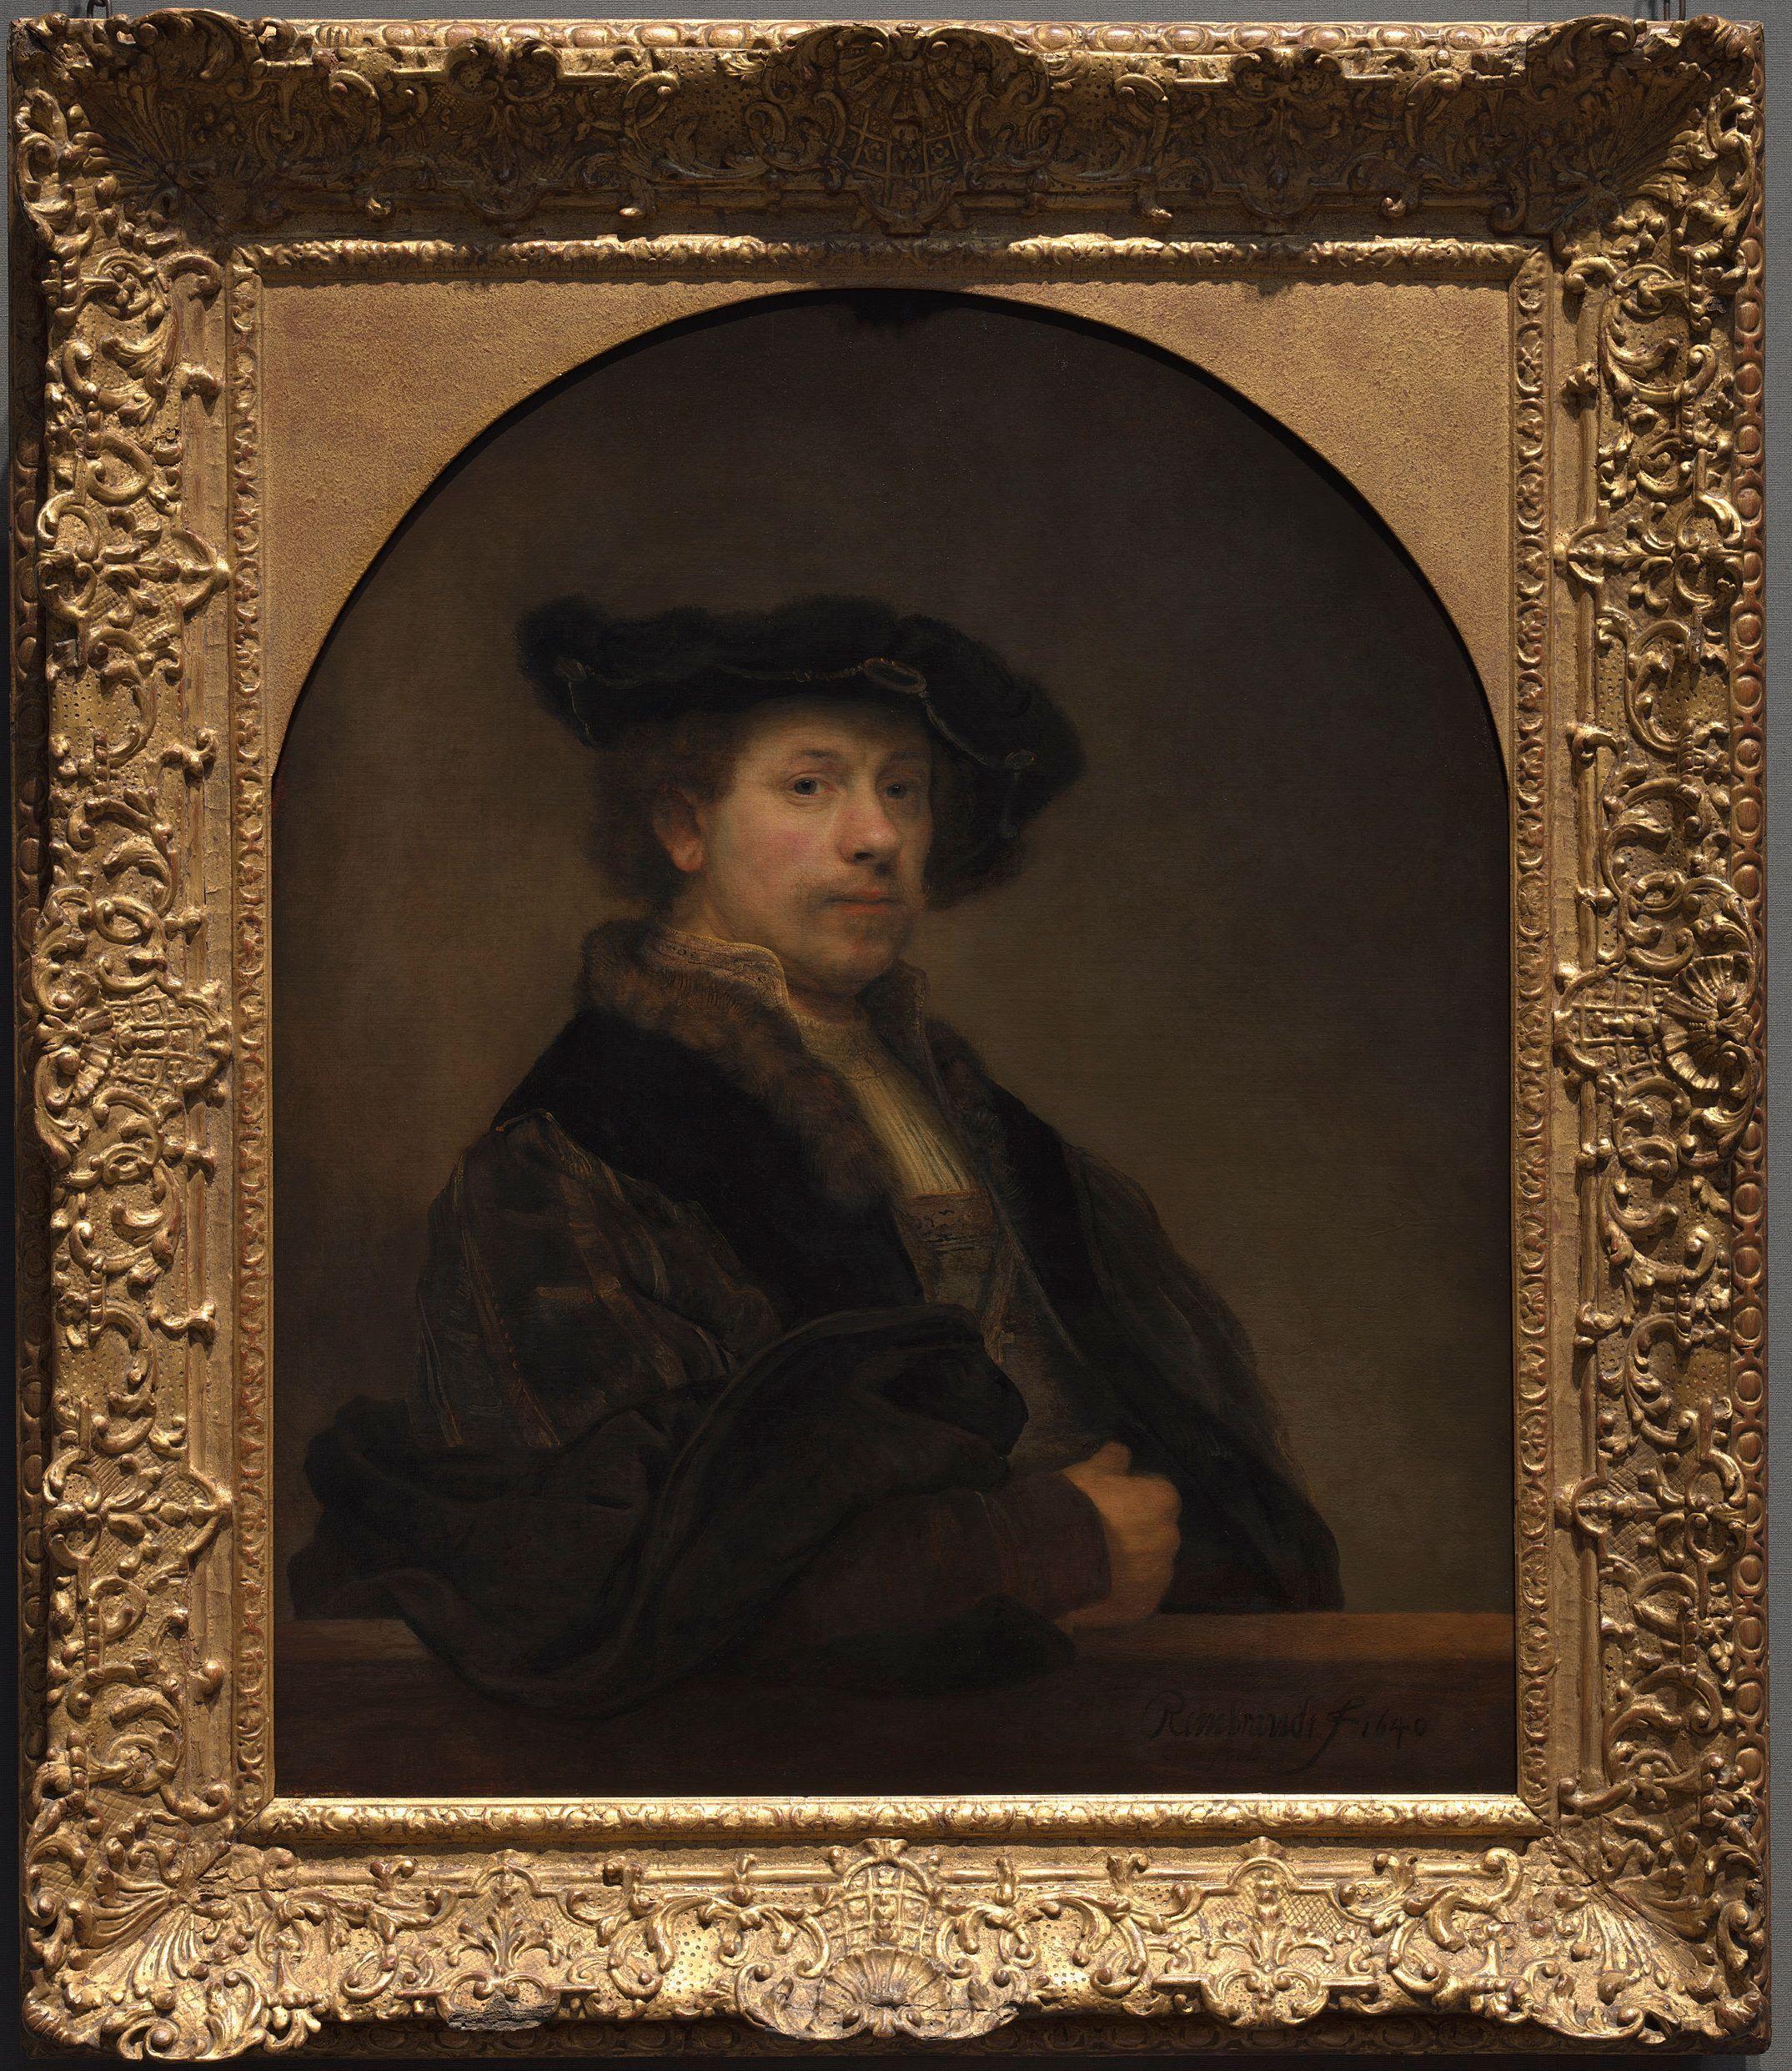 Rembrandt self-portrait goes on display in Brighton